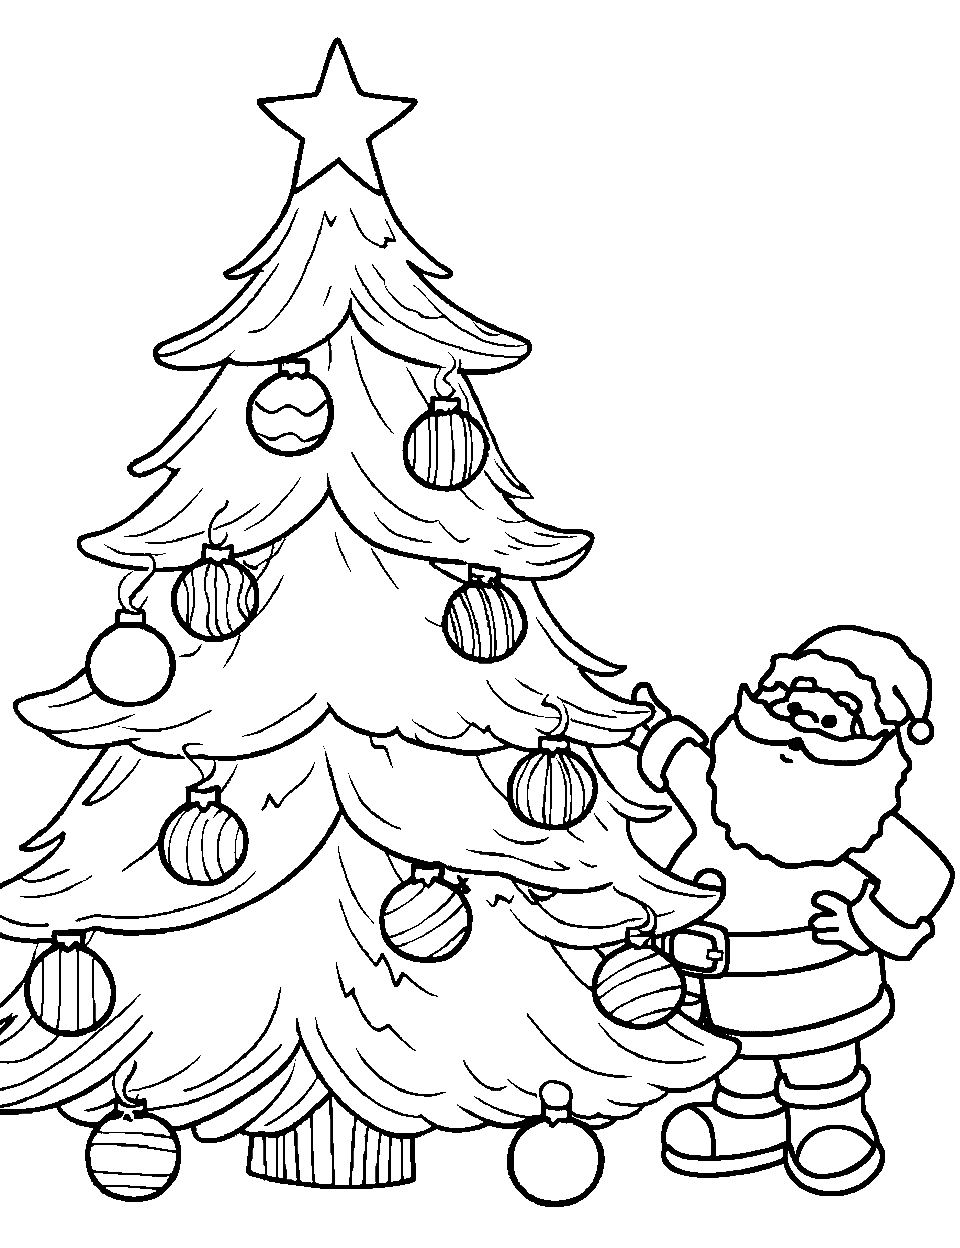 Christmas Tree Decorating Coloring Page - Santa decorating a tall Christmas tree with a star at the very top.